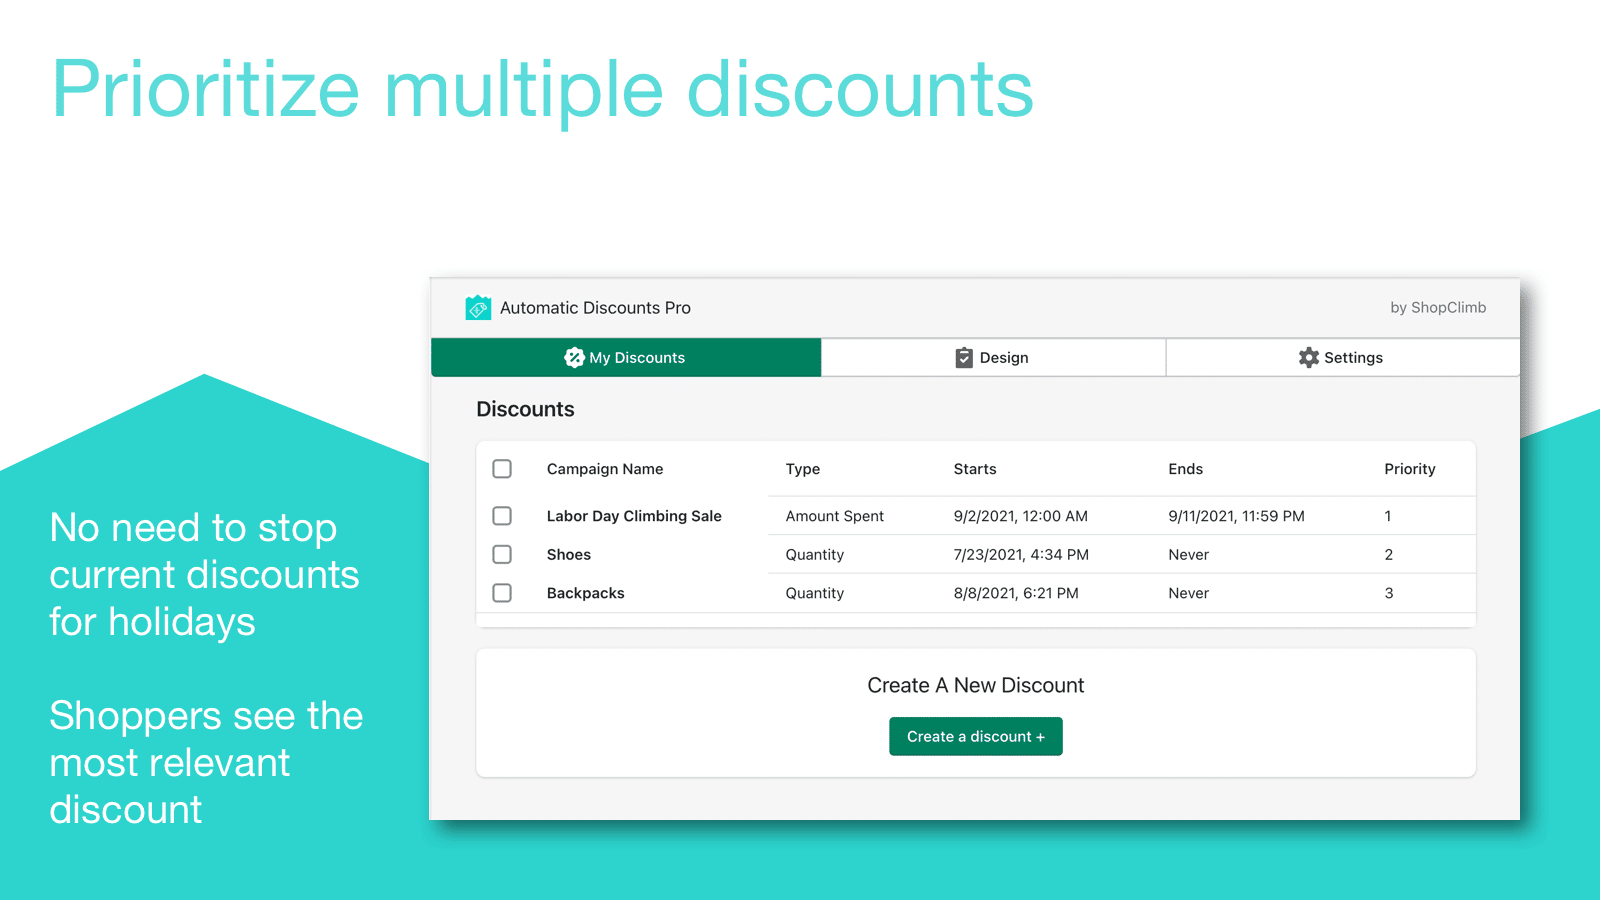 Automatic Discounts Pro